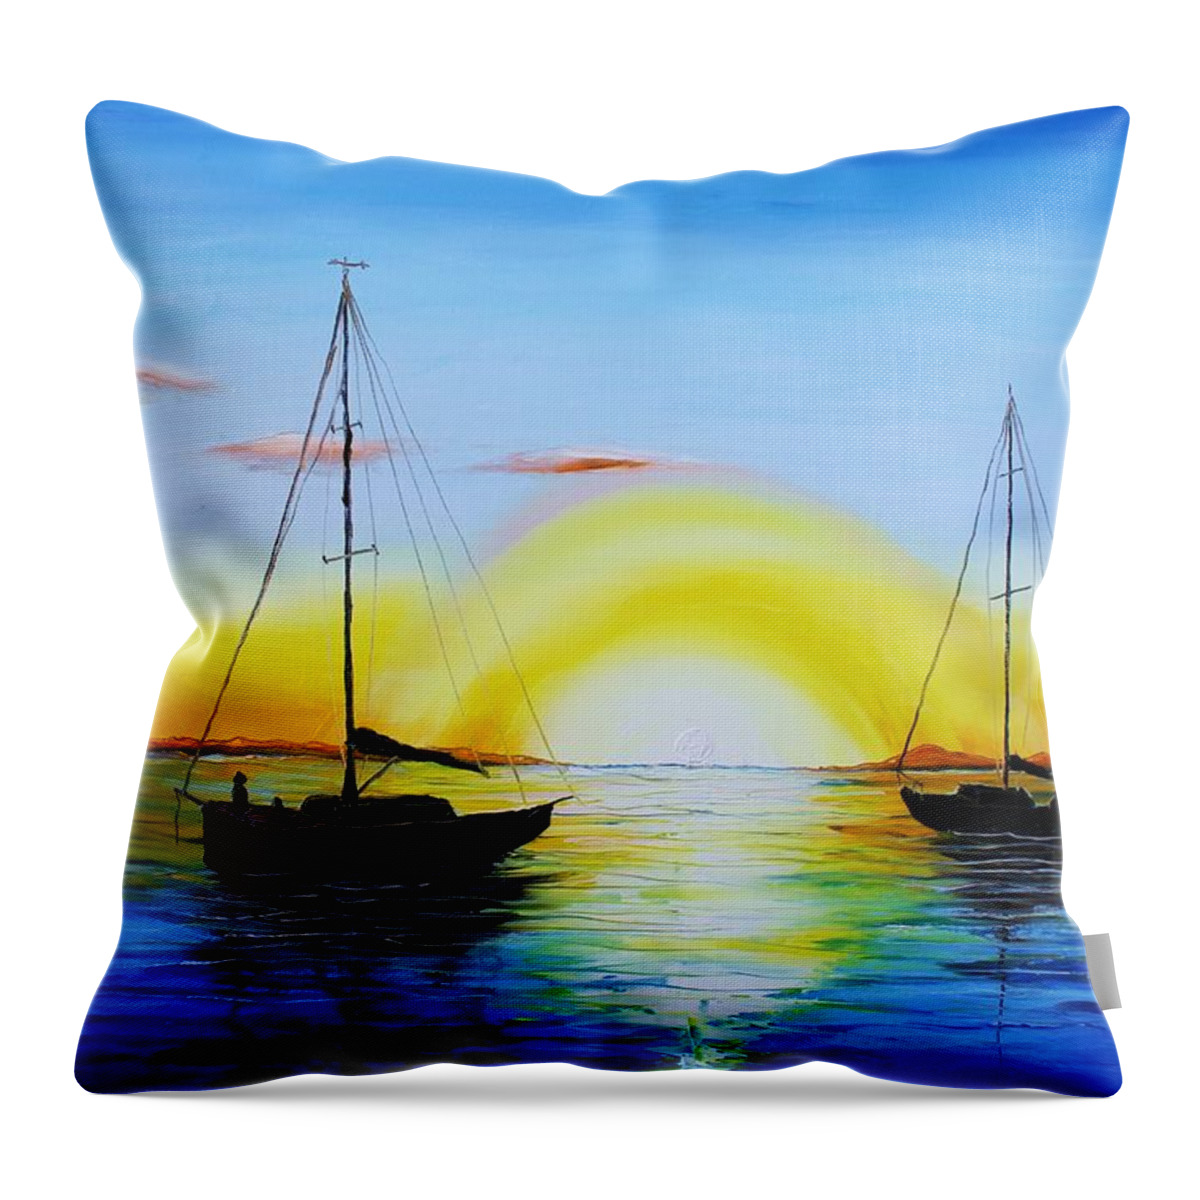  Throw Pillow featuring the painting Sunburst Sails #2 by James Dunbar